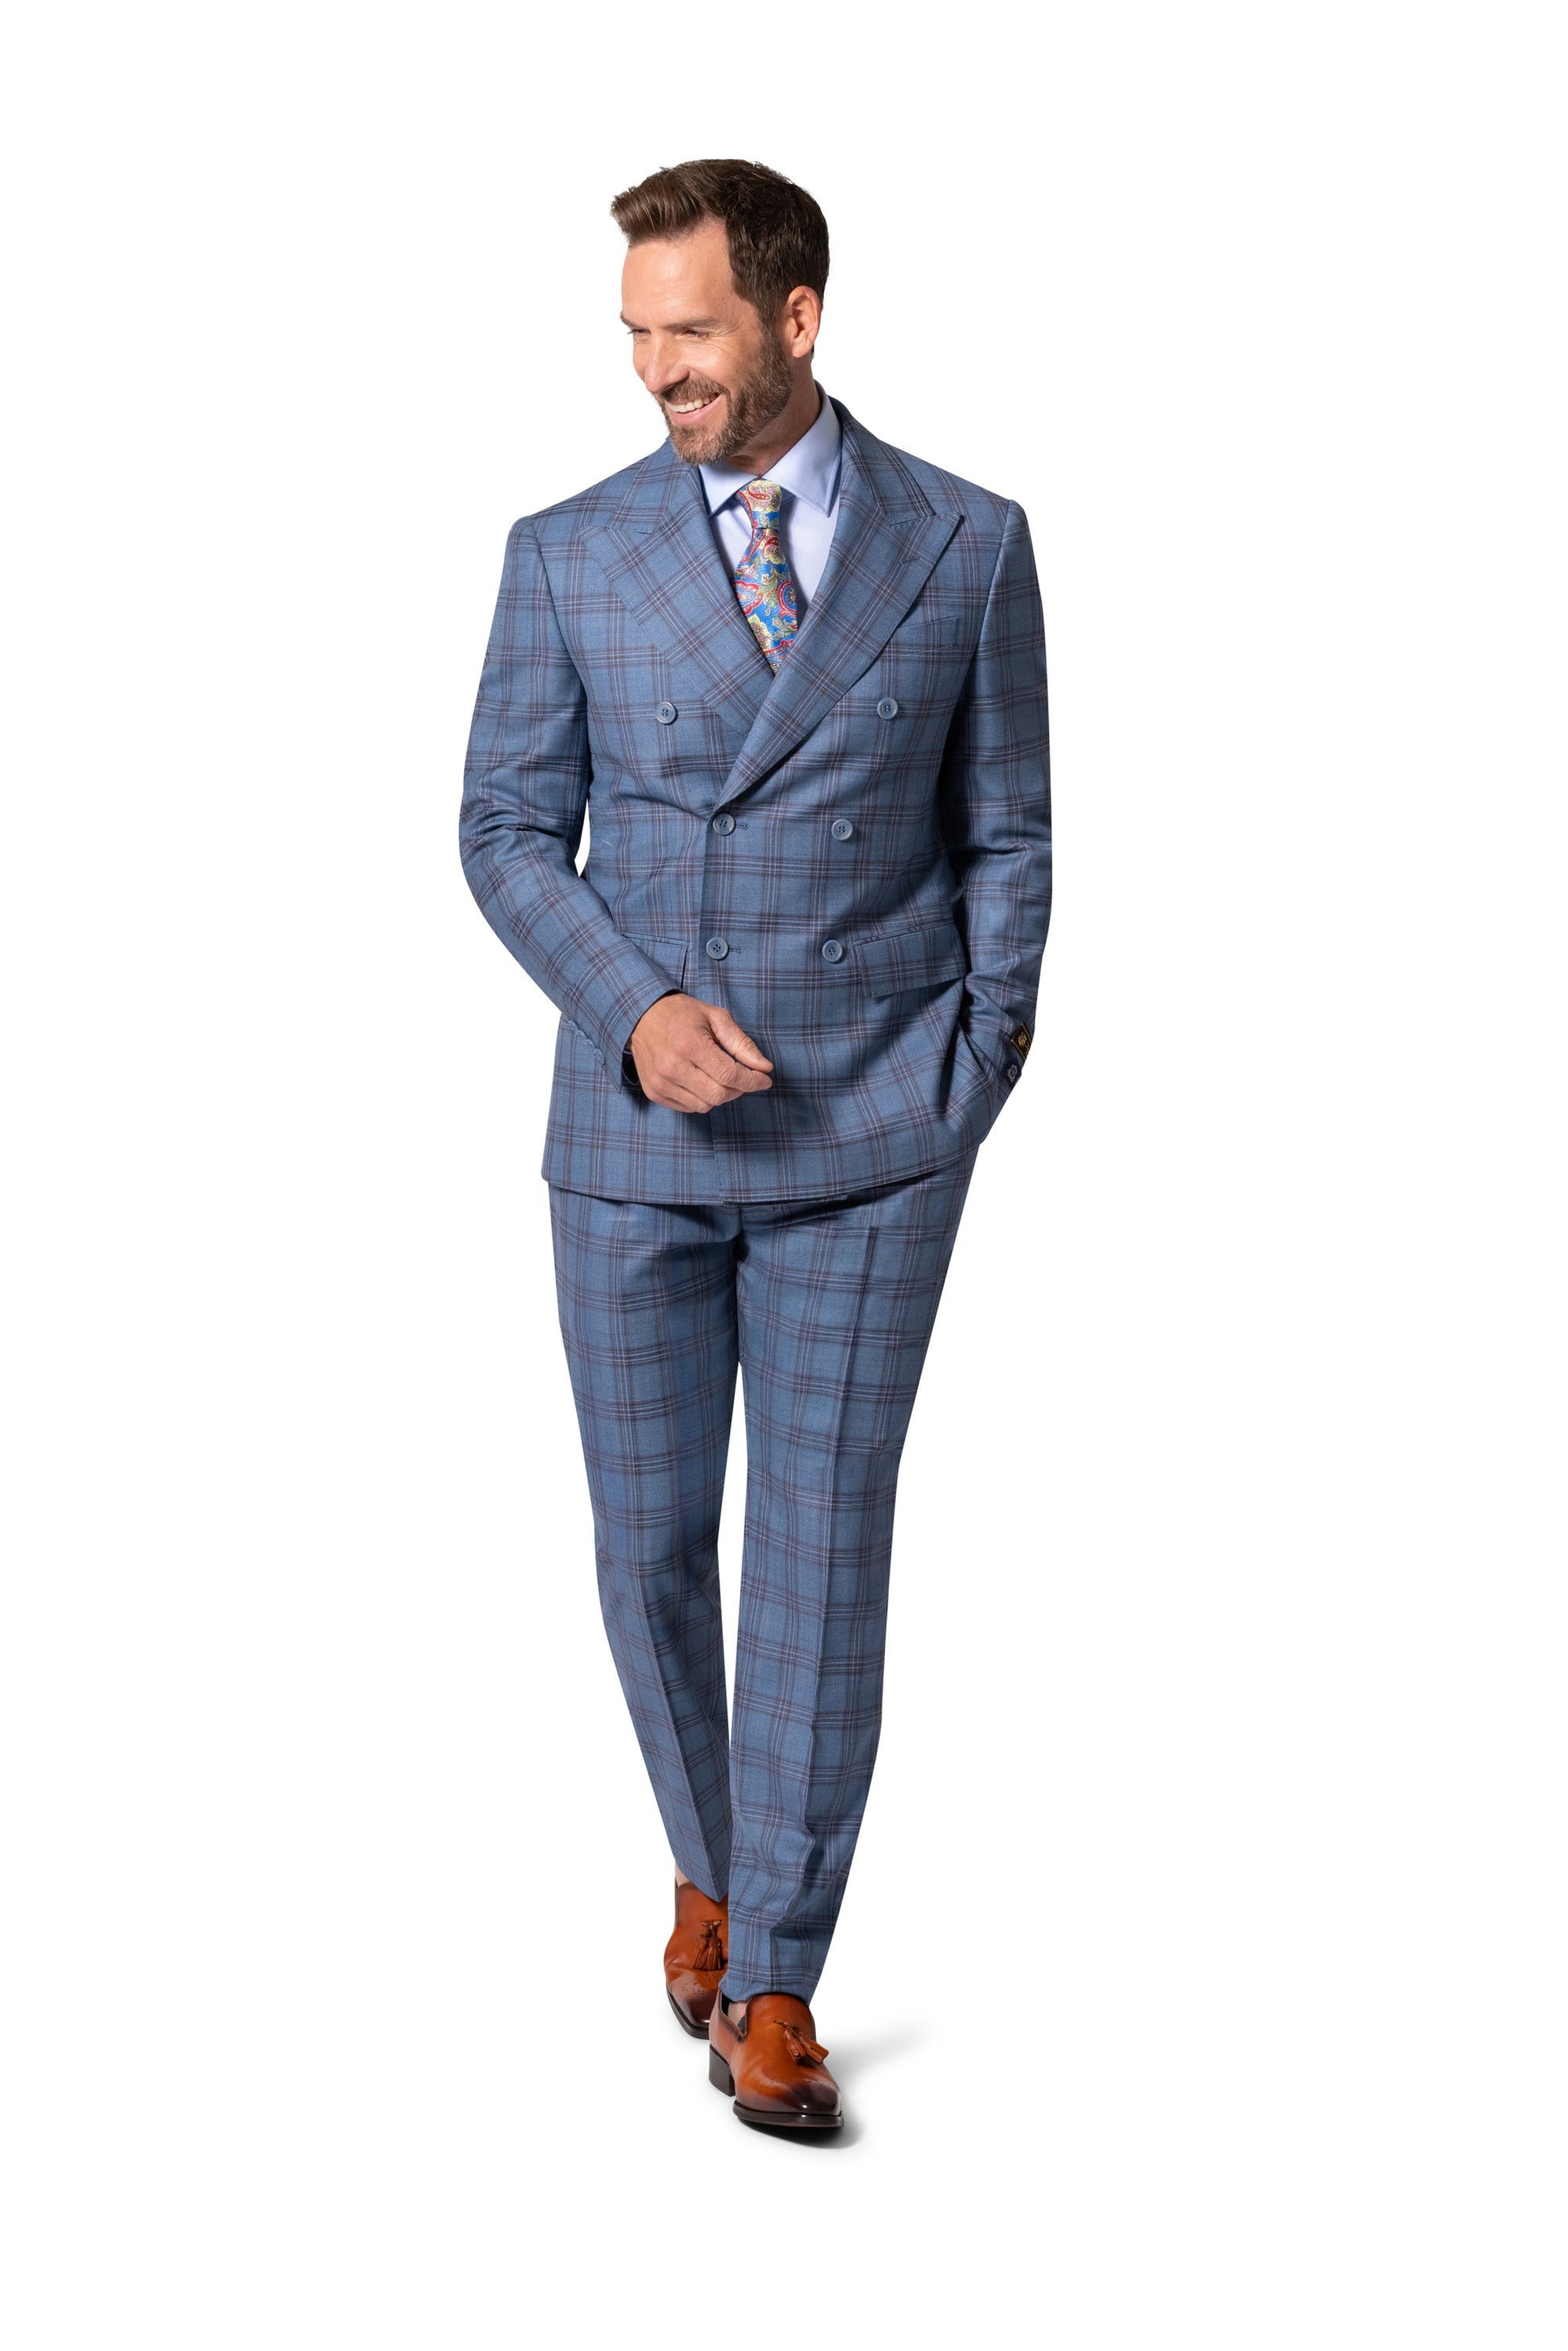 Berragamo Elegant - Faille Wool 10005.4098 D/B Big & Tall Suit